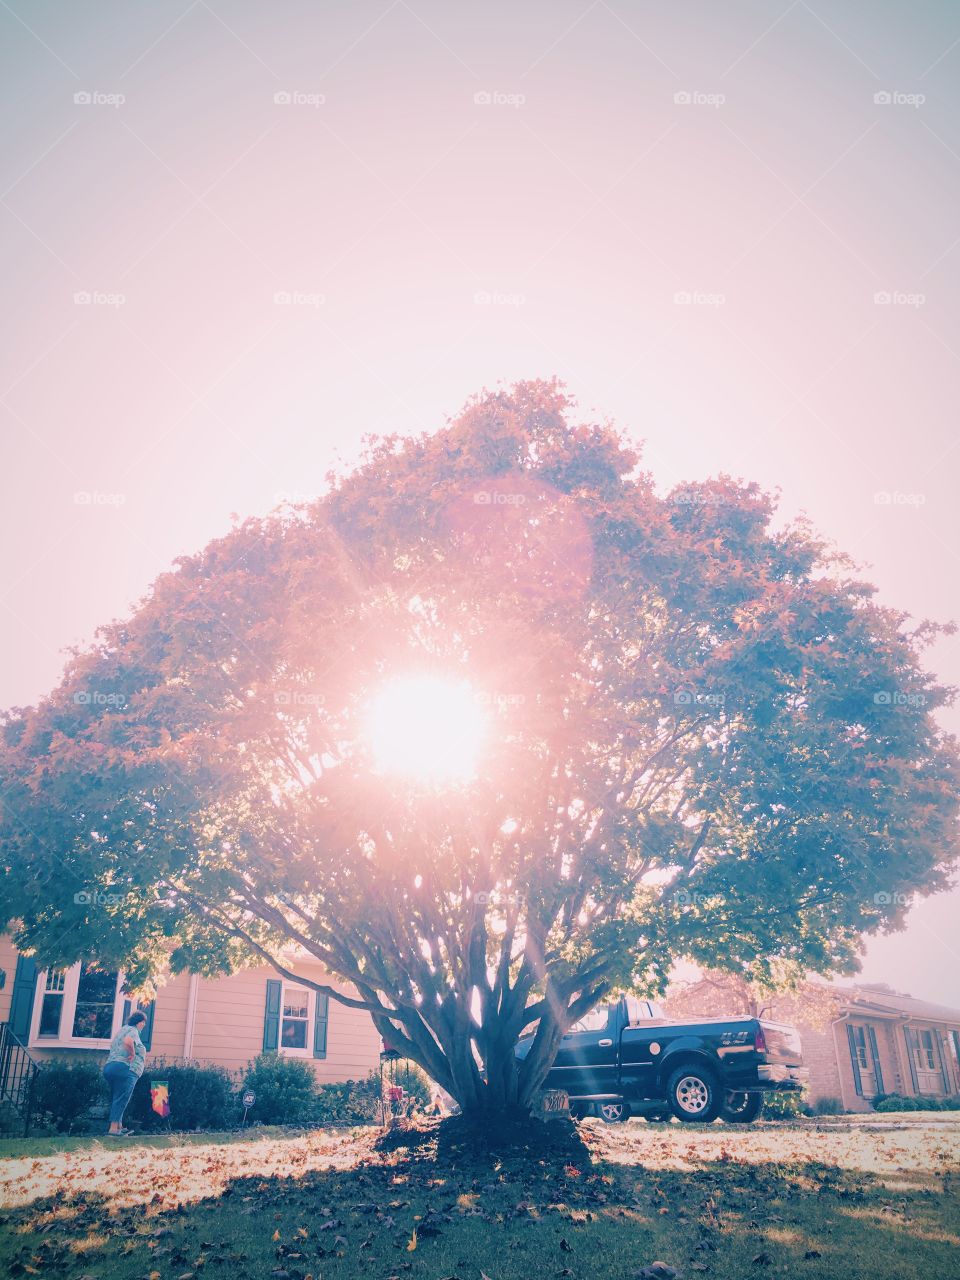 The sun shines through a grand tree